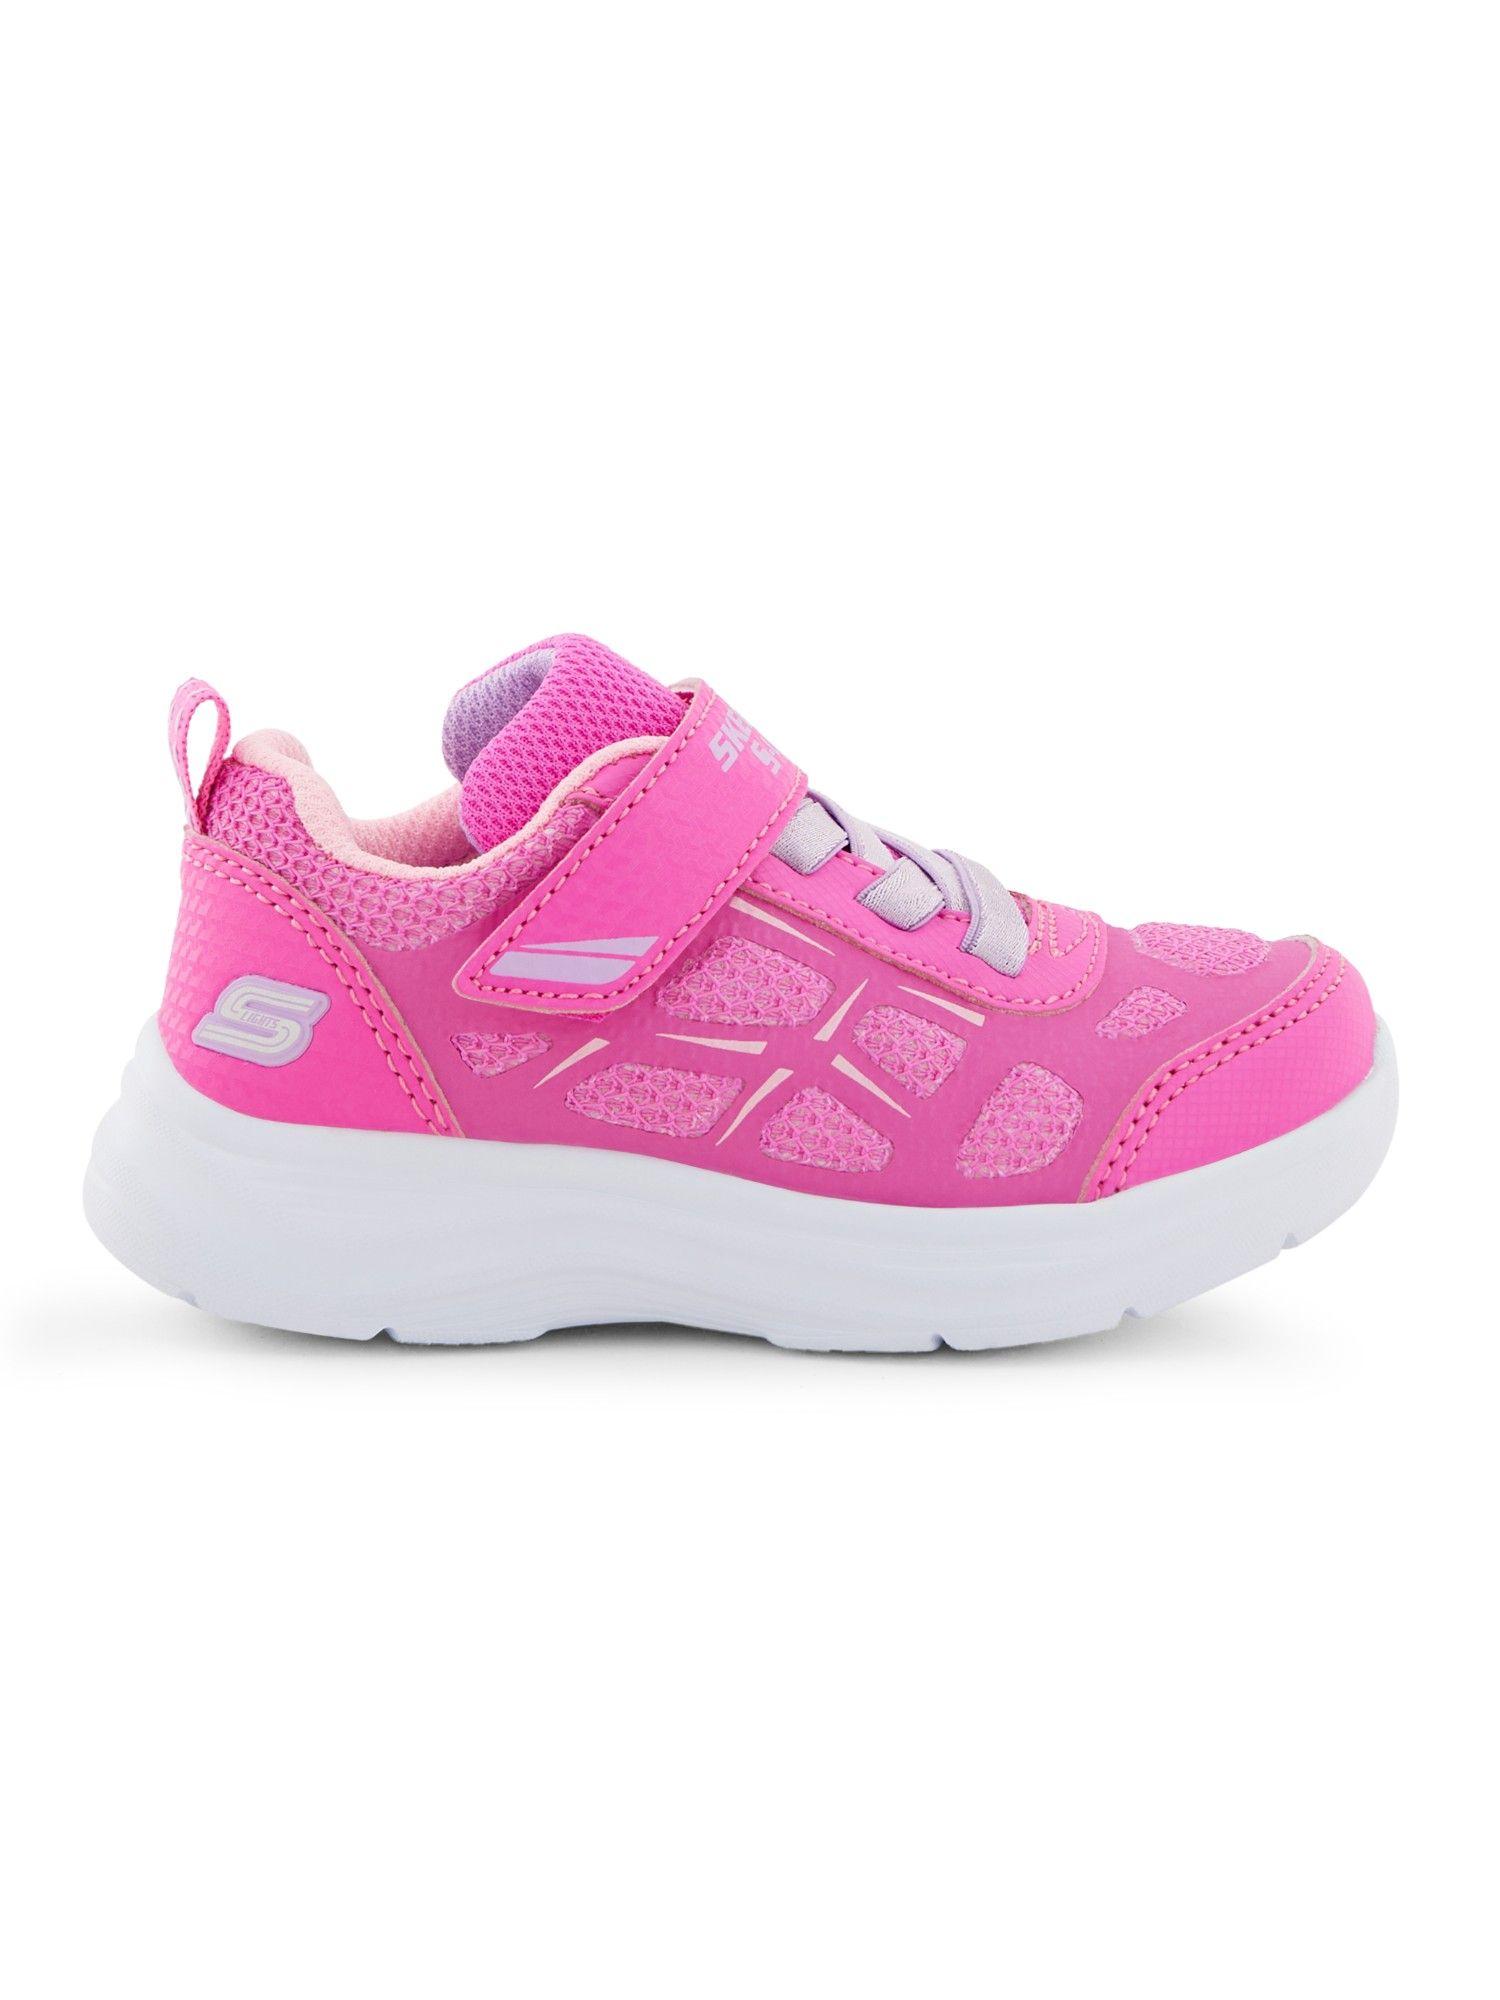 girls glimmer kicks - fresh glow pink casual shoes